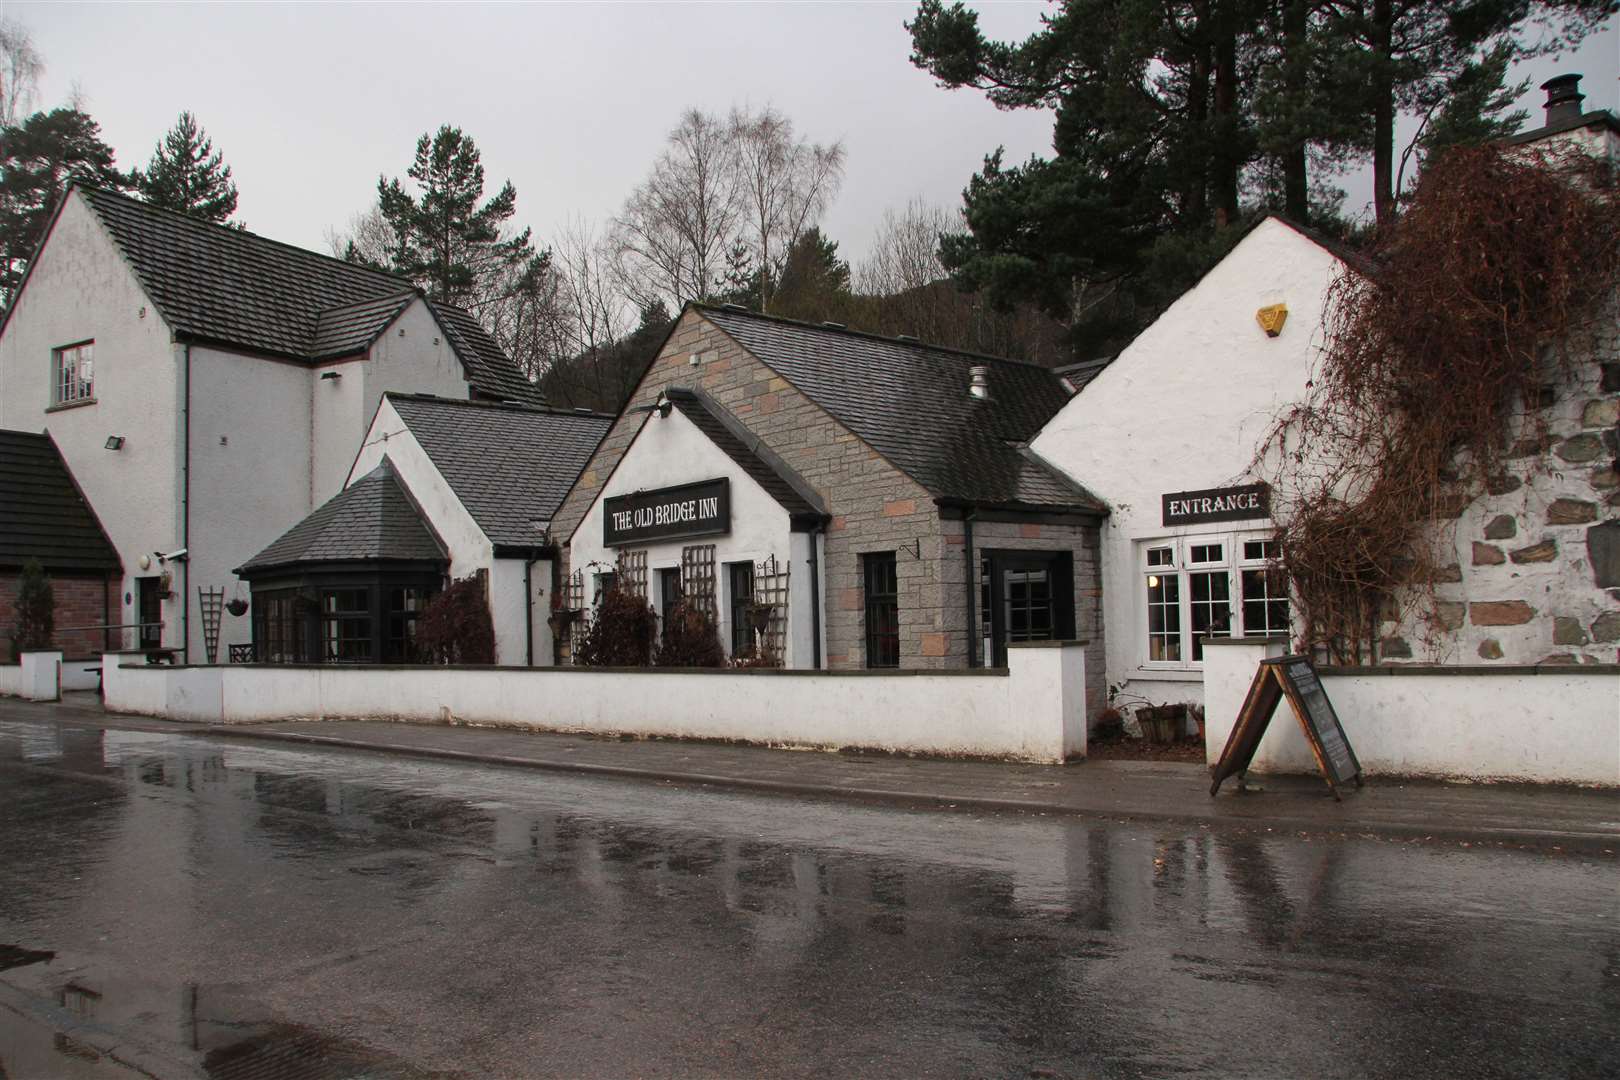 The Old Bridge Inn in Aviemore.